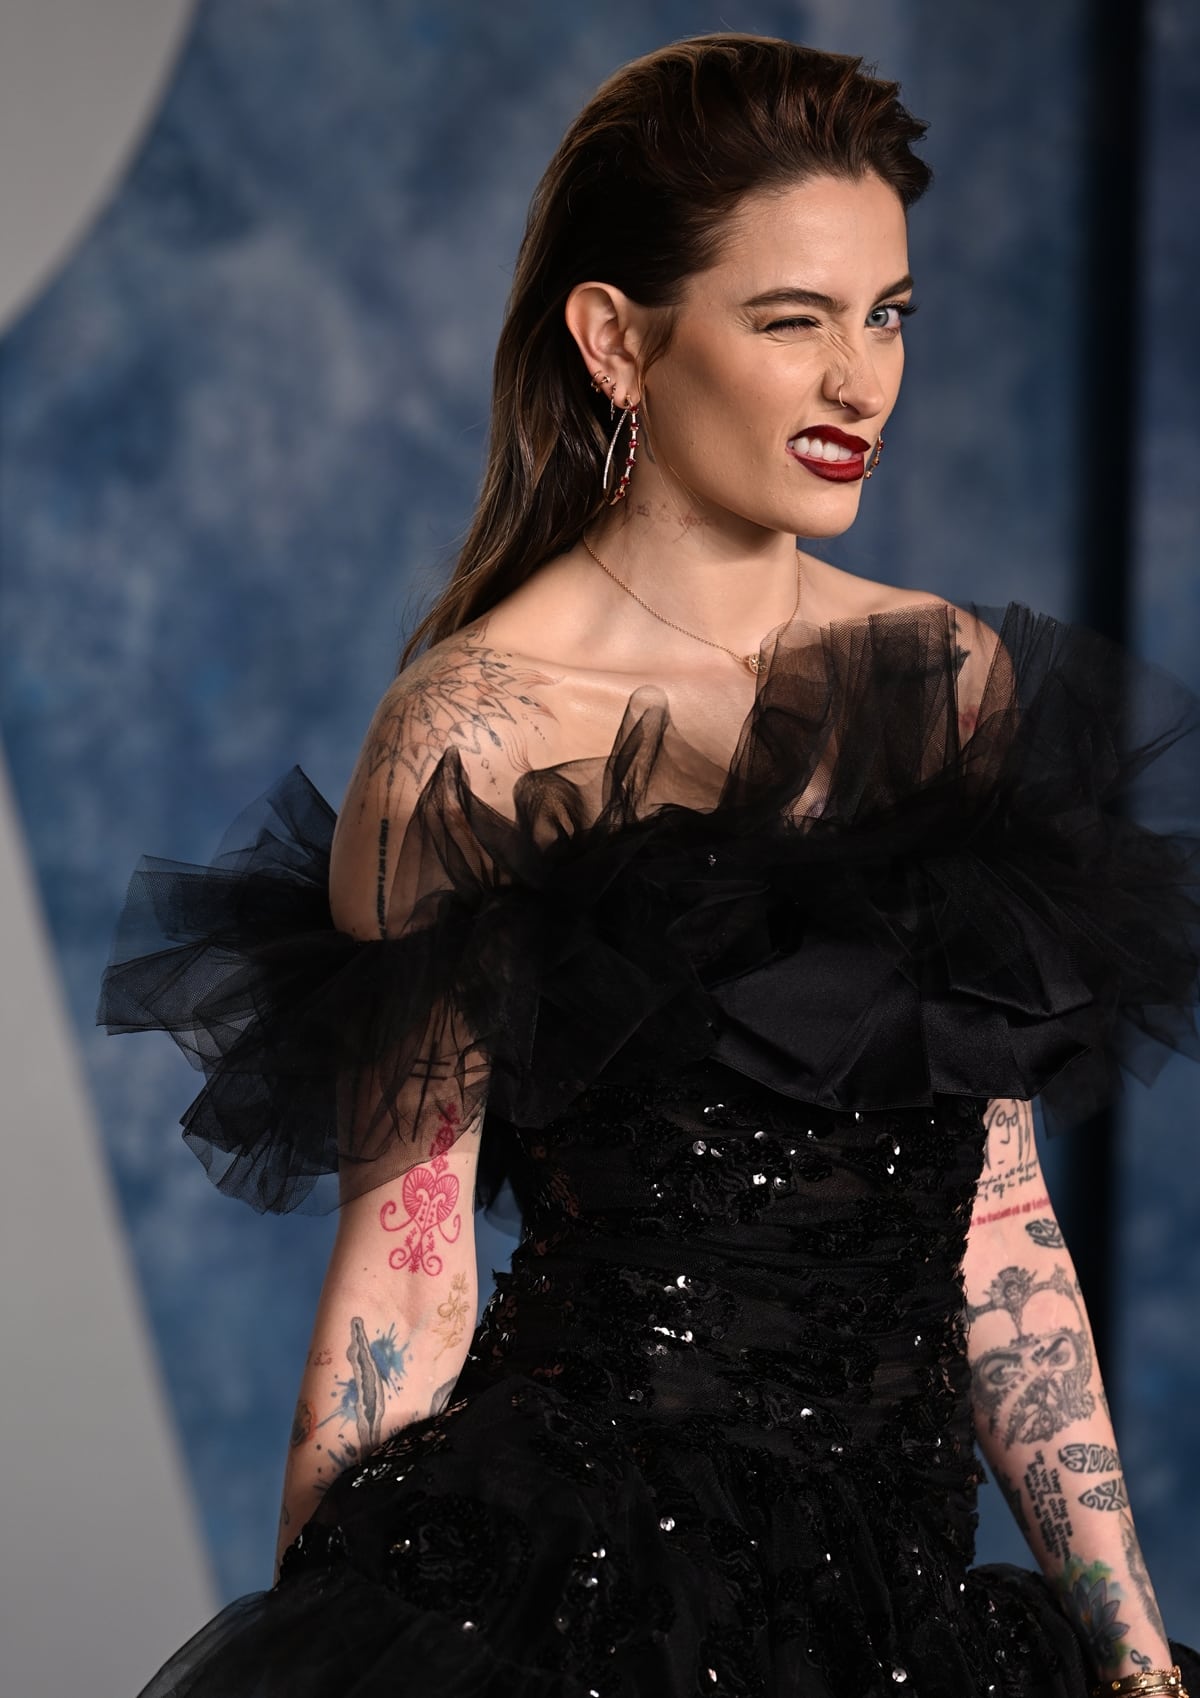 Paris Jackson rocks a sparkling black high-low dress with a statement ruffle neckline and a drop waist from Giambattista Valli couture